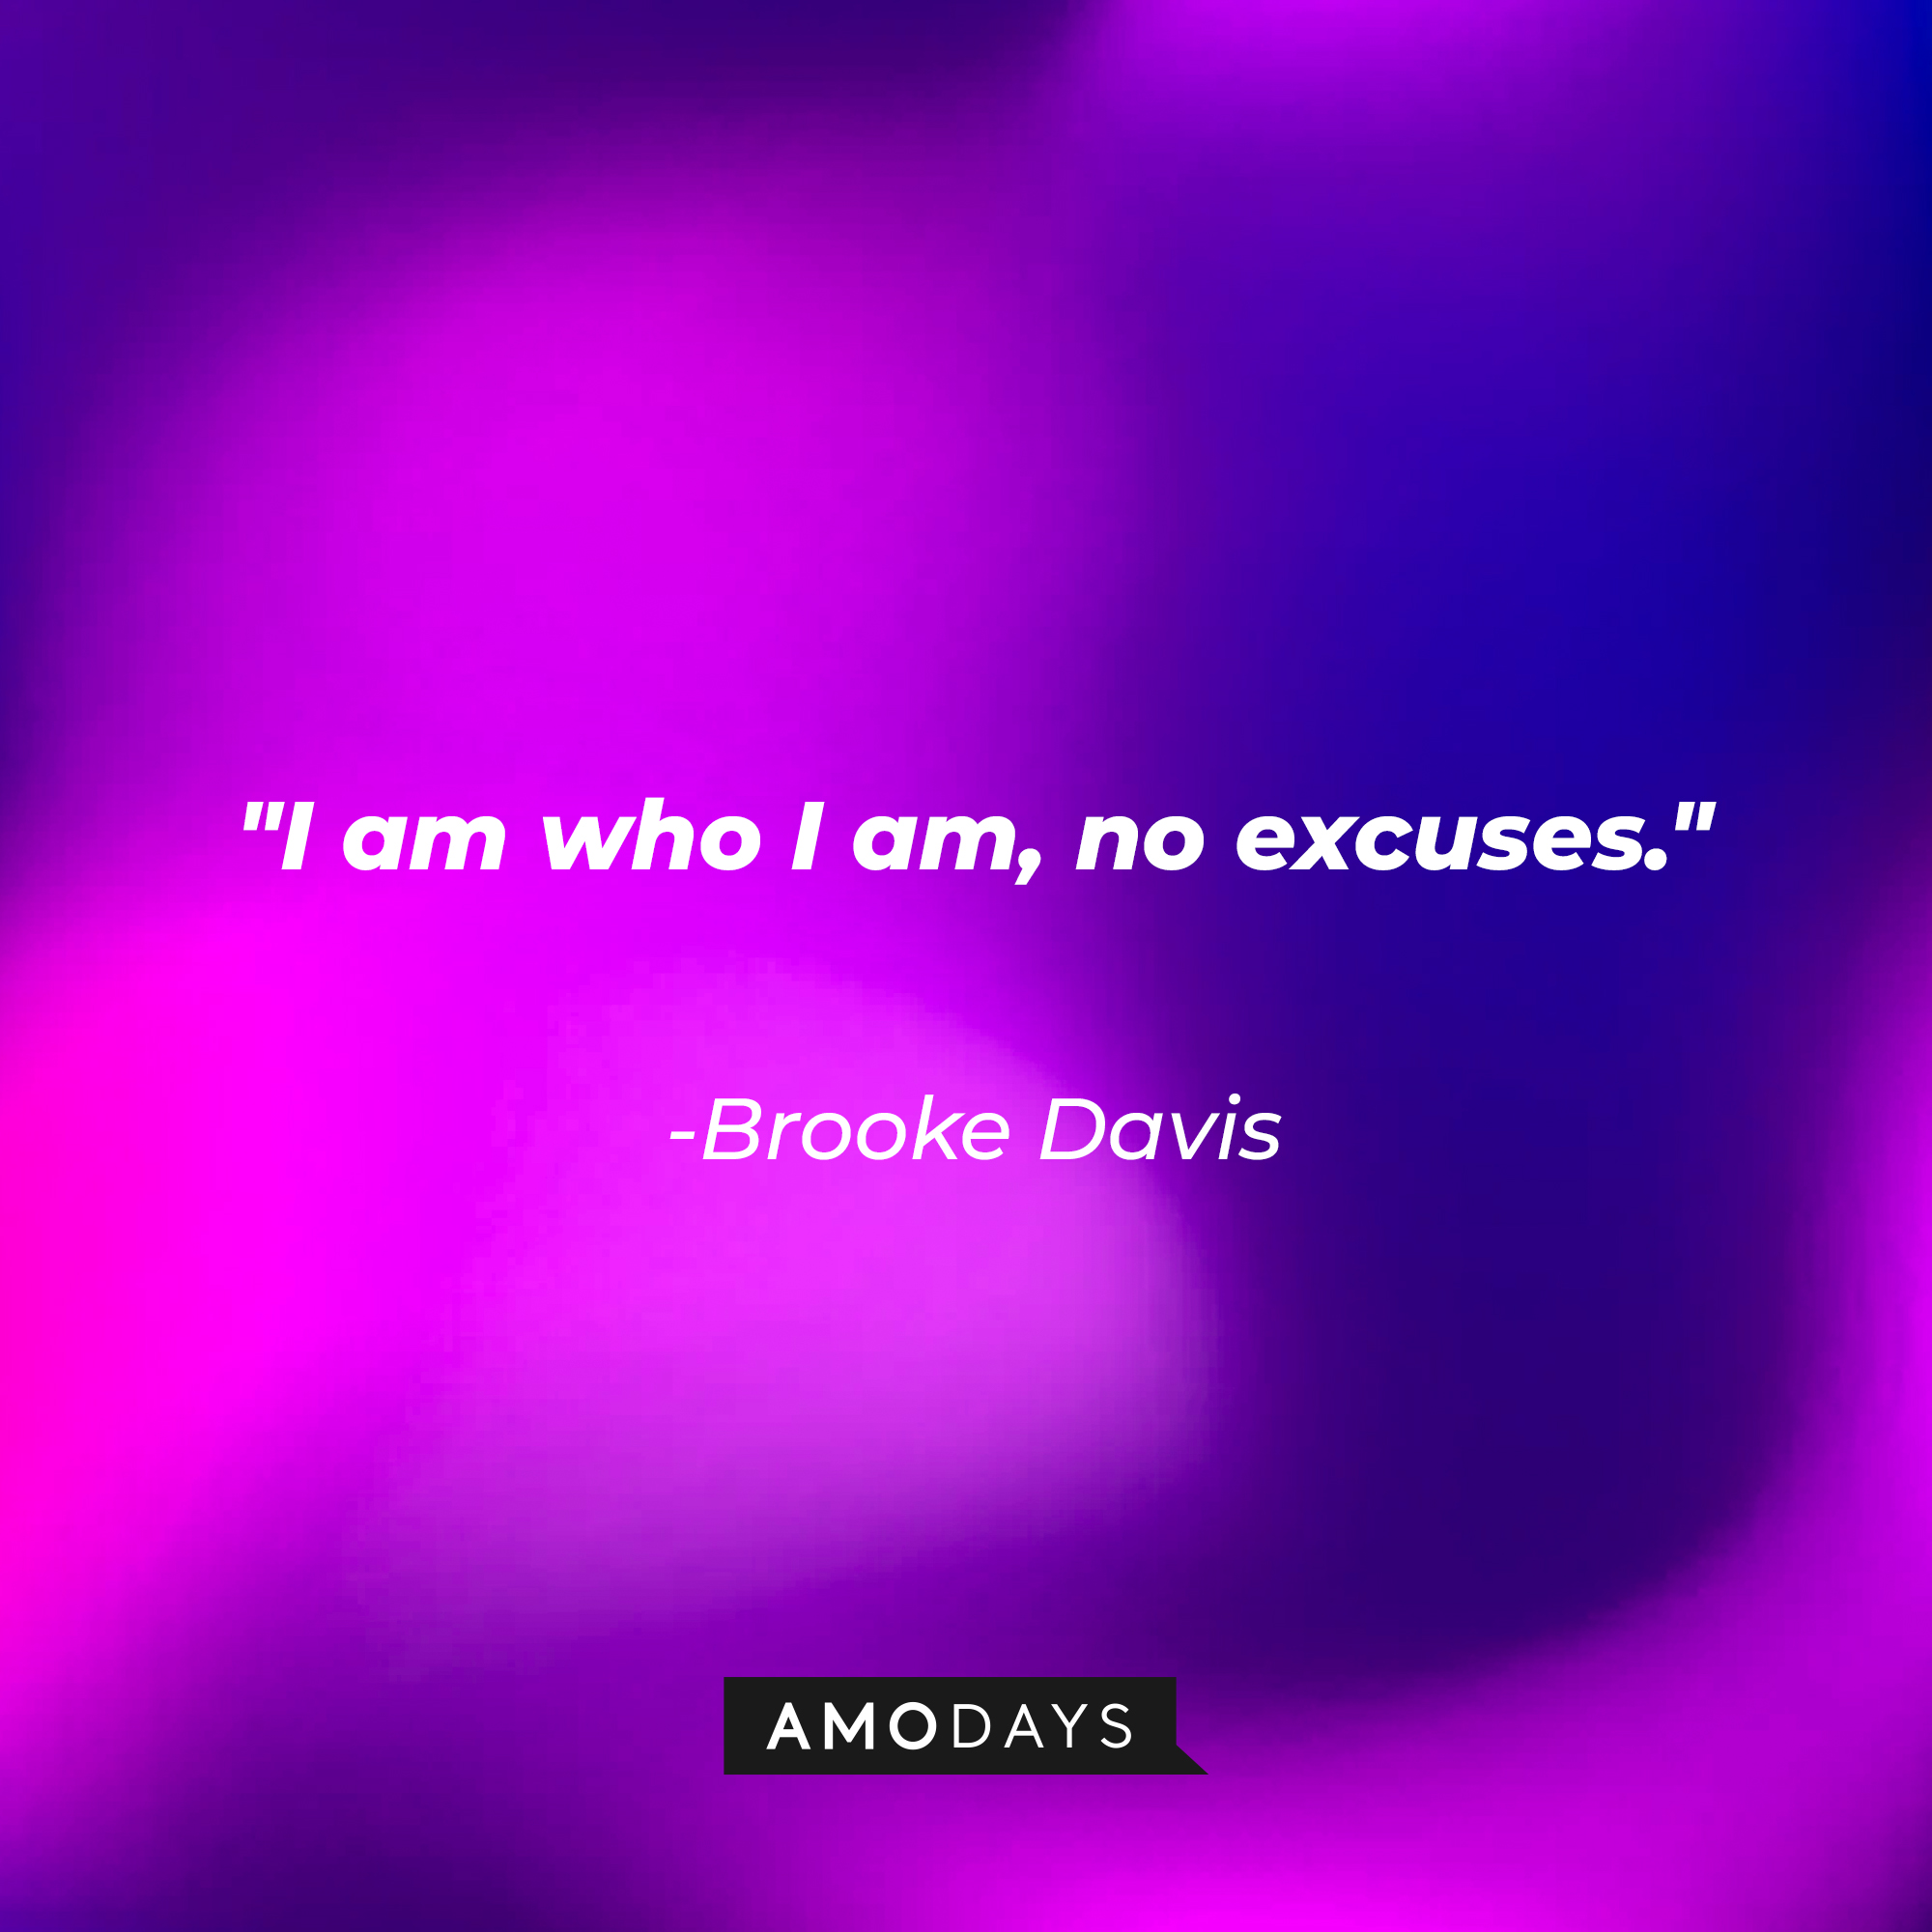 Brooke Davis' quote: "I am who I am, no excuses." | Source: AmoDays